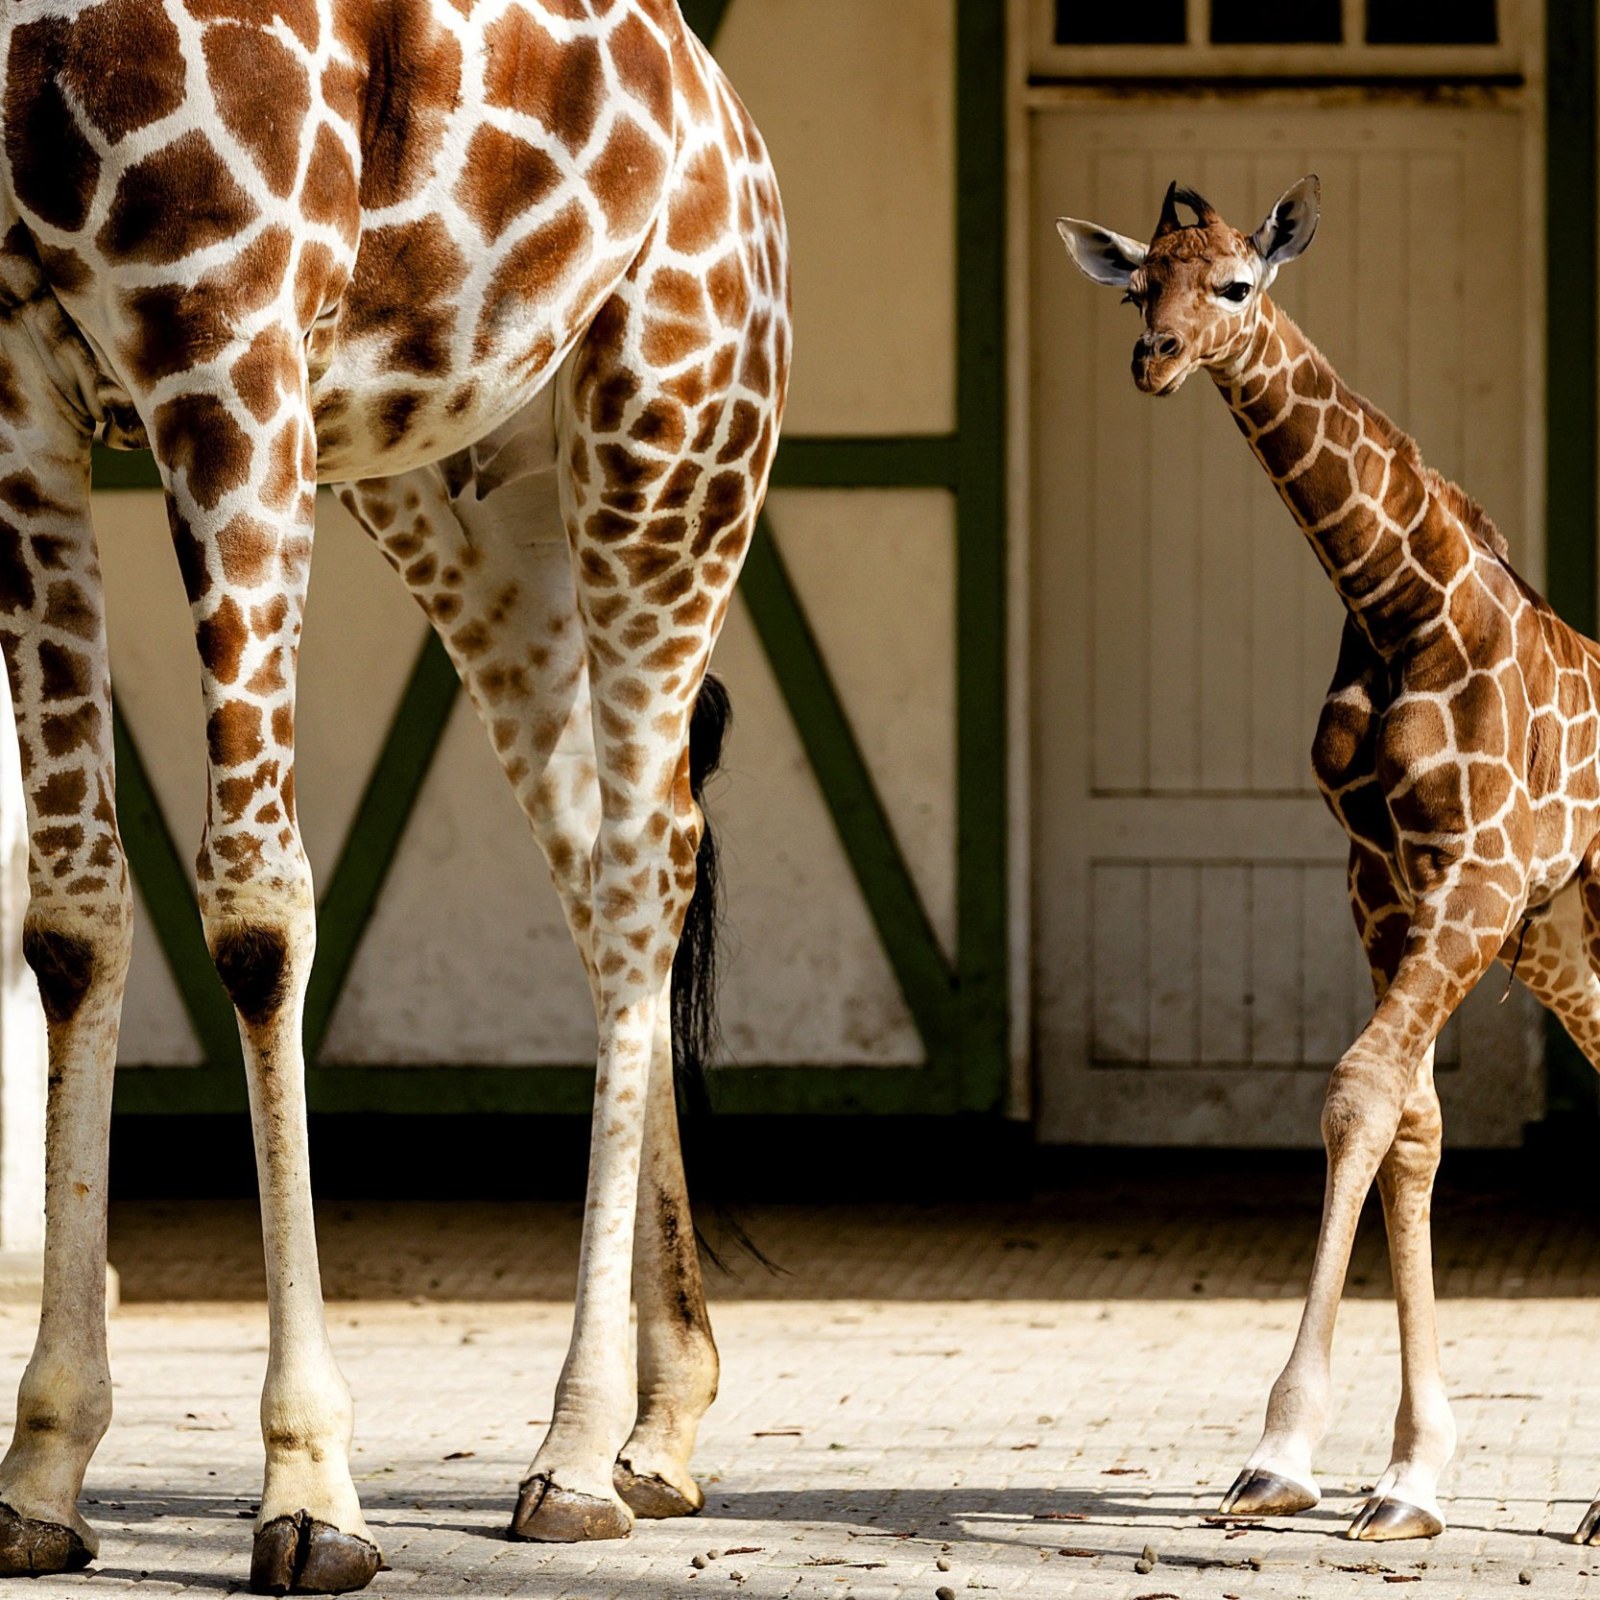 April The Giraffe May Be Pregnant Again, Animal Adventure Park Says